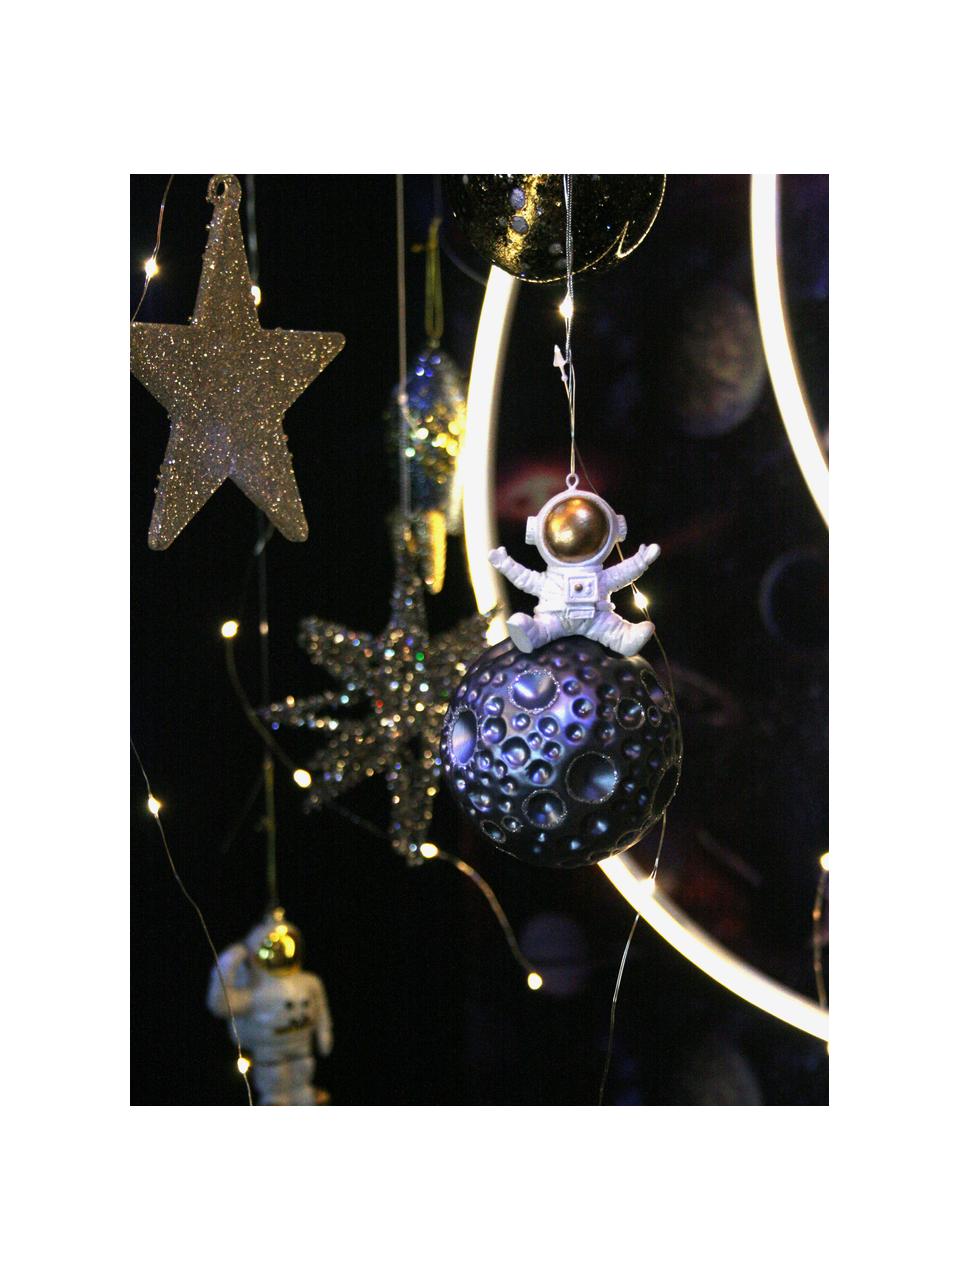 Baumanhänger-Set Silver Star, 2 Stück, Glas, Silberfarben, B 10 x H 10 cm